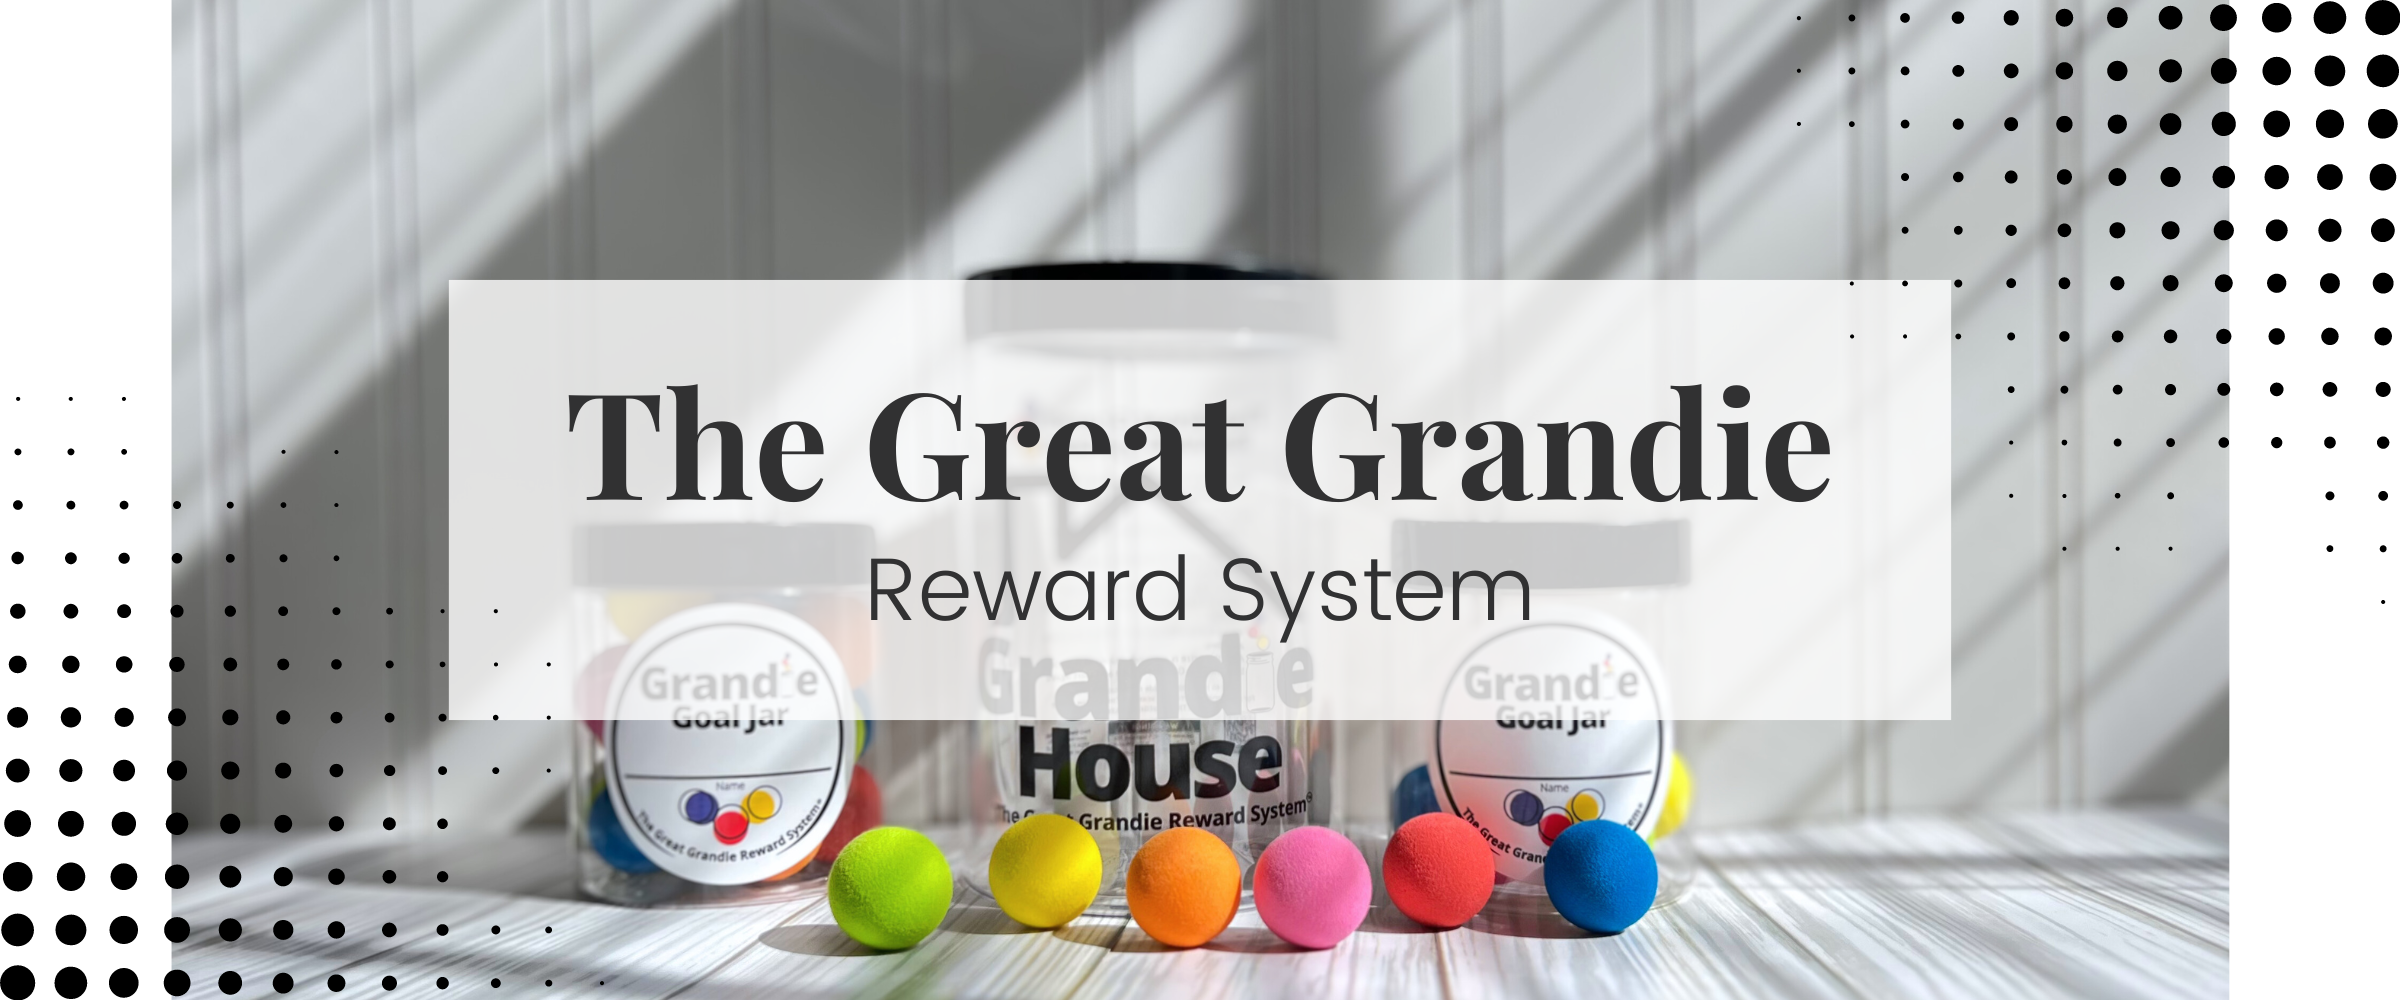 The Great Grandie Reward System